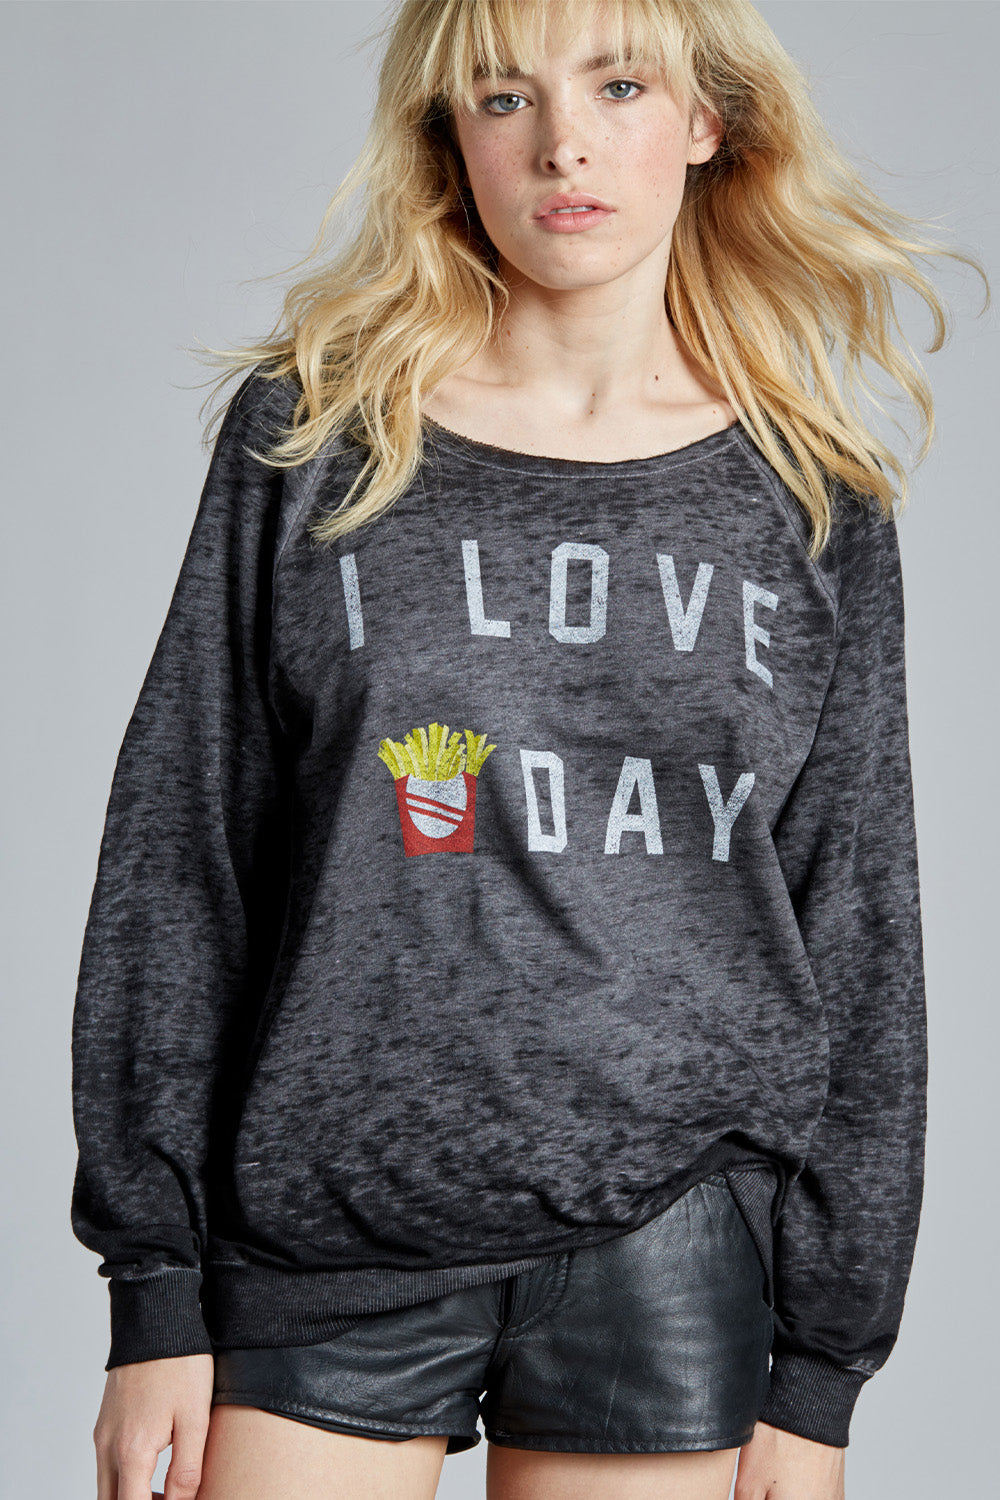 I Love Fry-Day Pull Over Sweatshirt